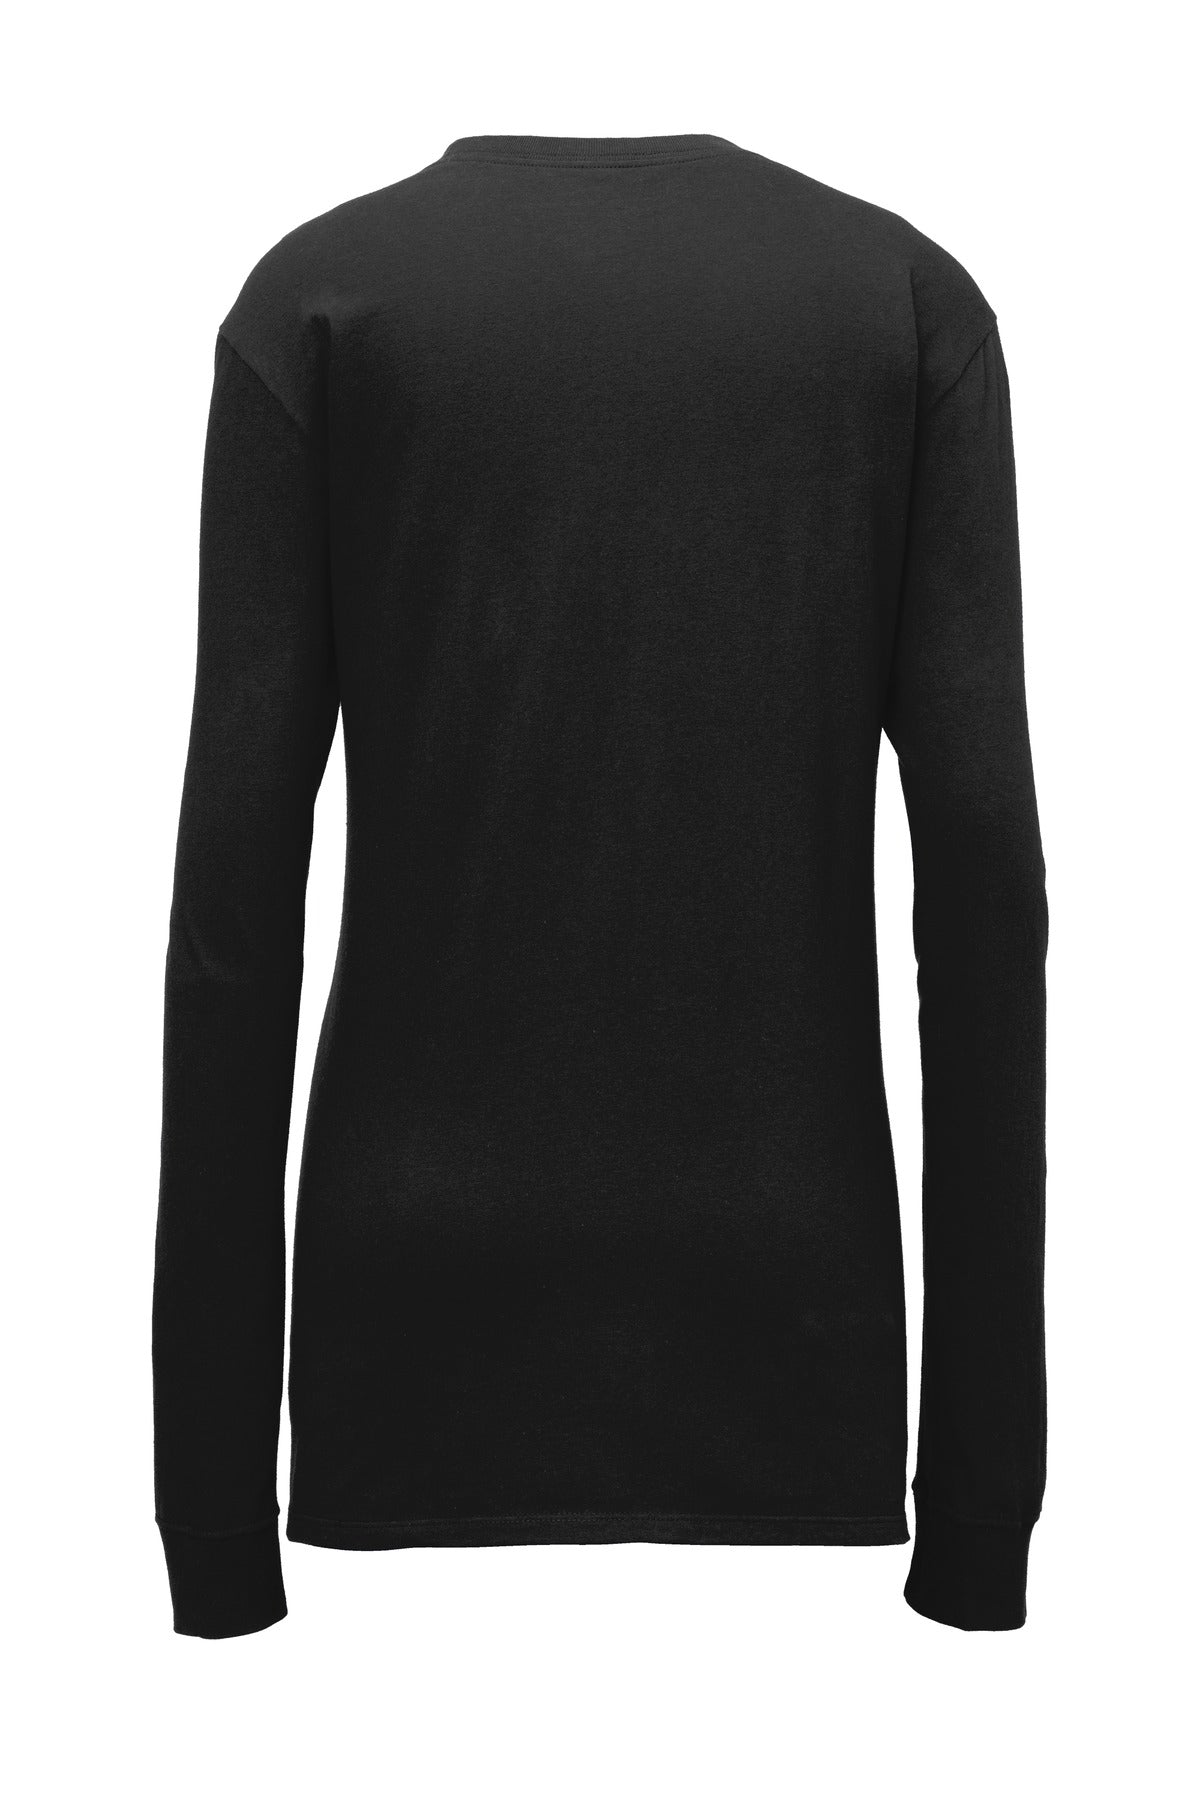 Nike Ladies Core Cotton Long Sleeve Scoop Neck Tee. NKBQ5235 - BT Imprintables Shirts